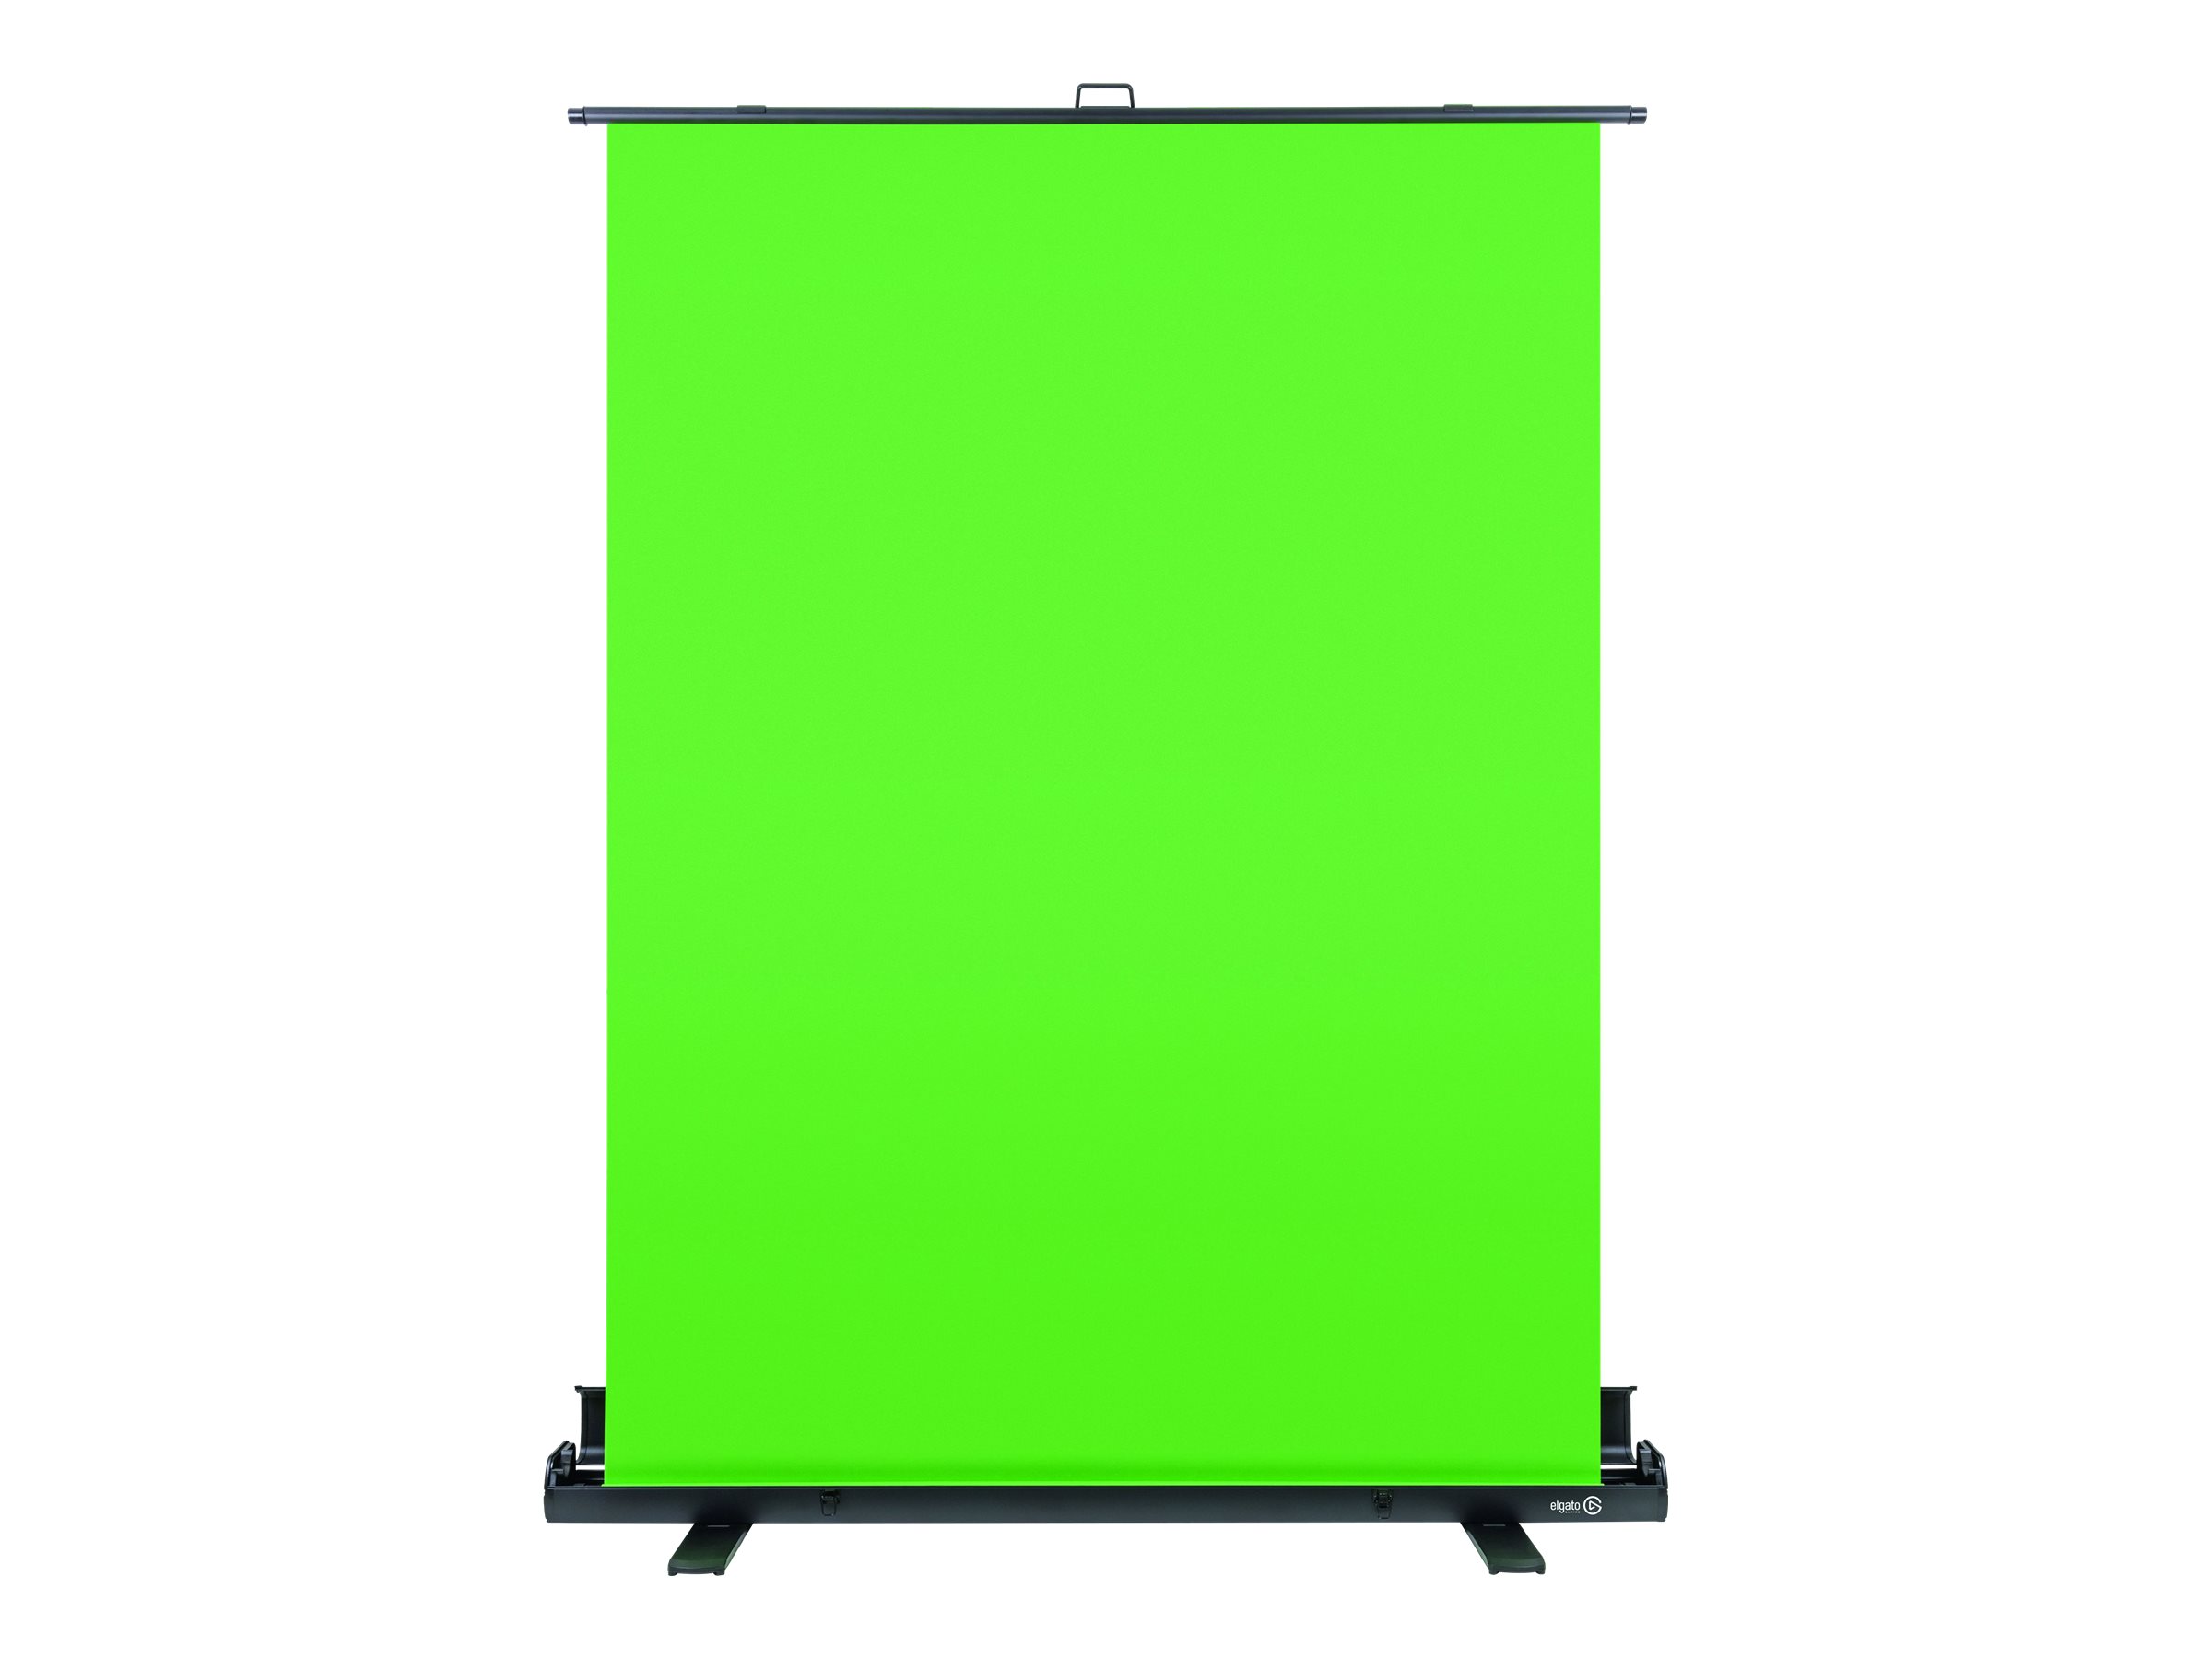 Elgato Green Screen - Hintergrund - Polyester - 1.48 m x 1.8 m - Chroma-Key - Chromagreen